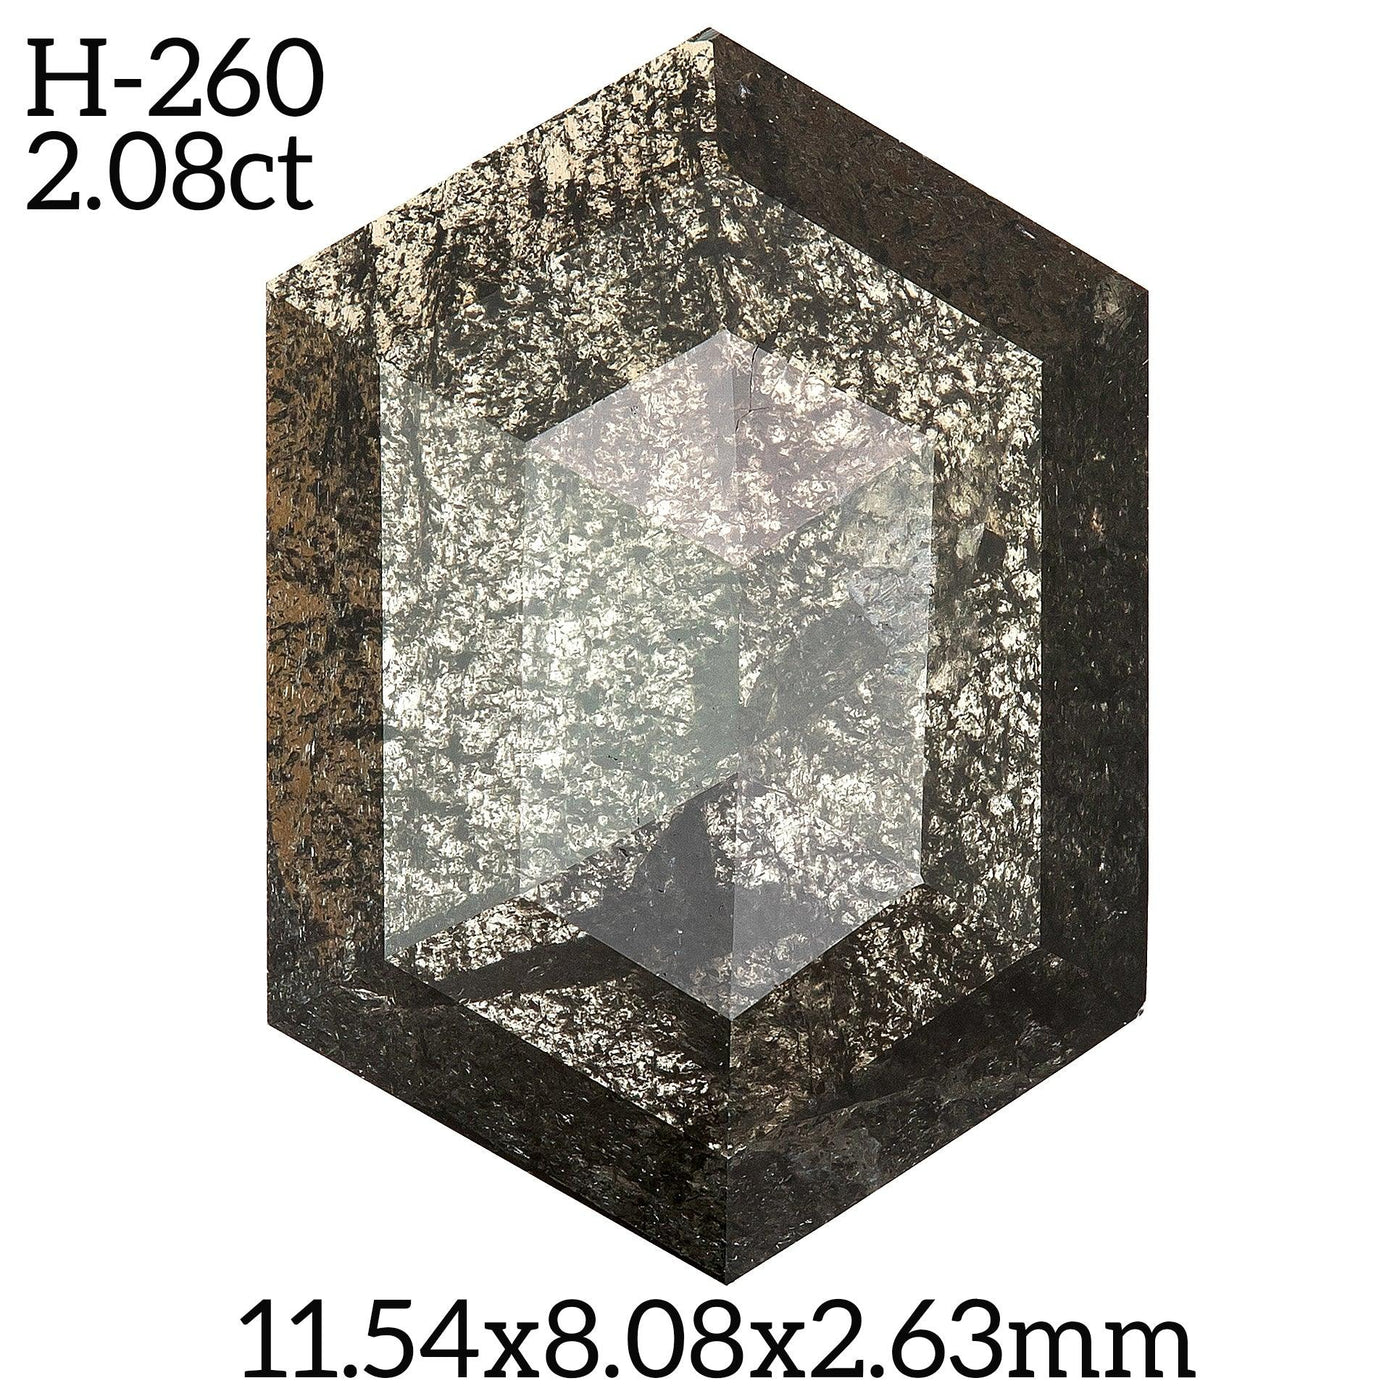 H260 - Salt and pepper hexagon diamond - Rubysta